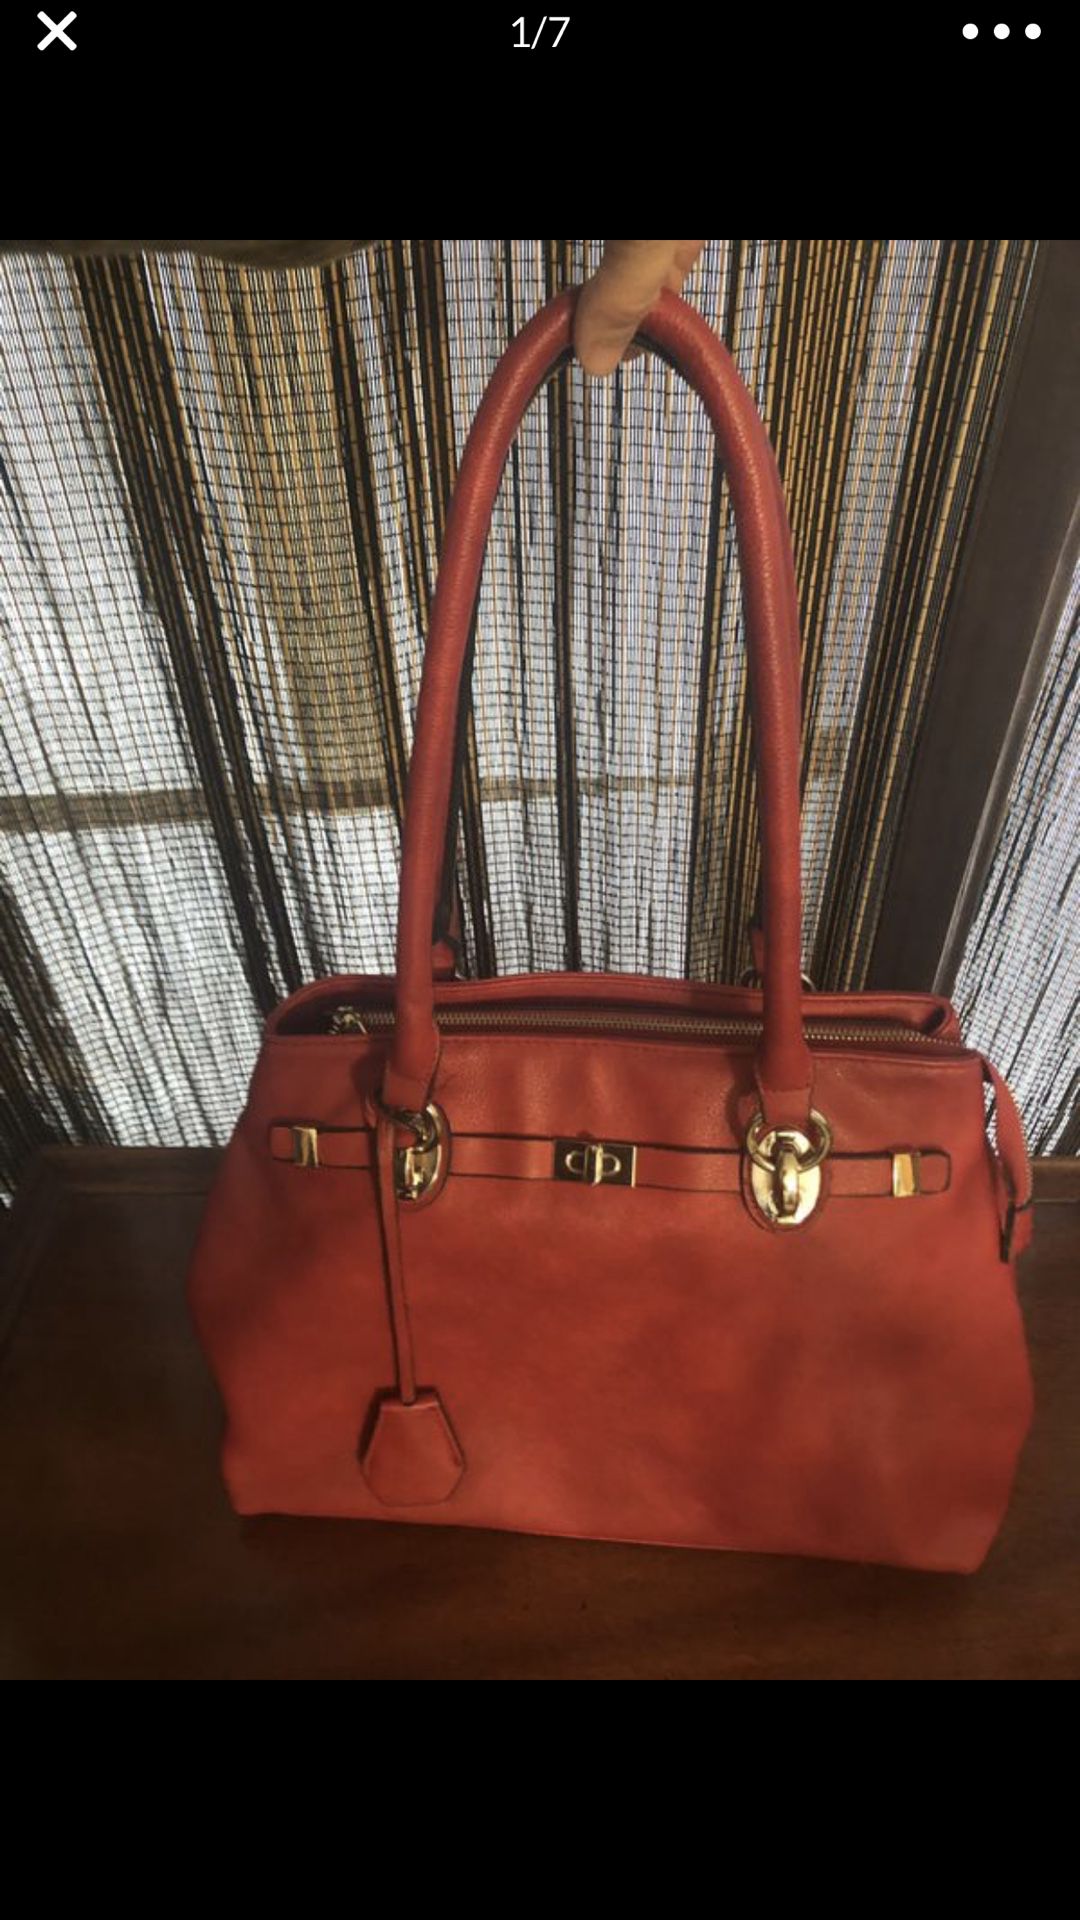 Oversized red handbag